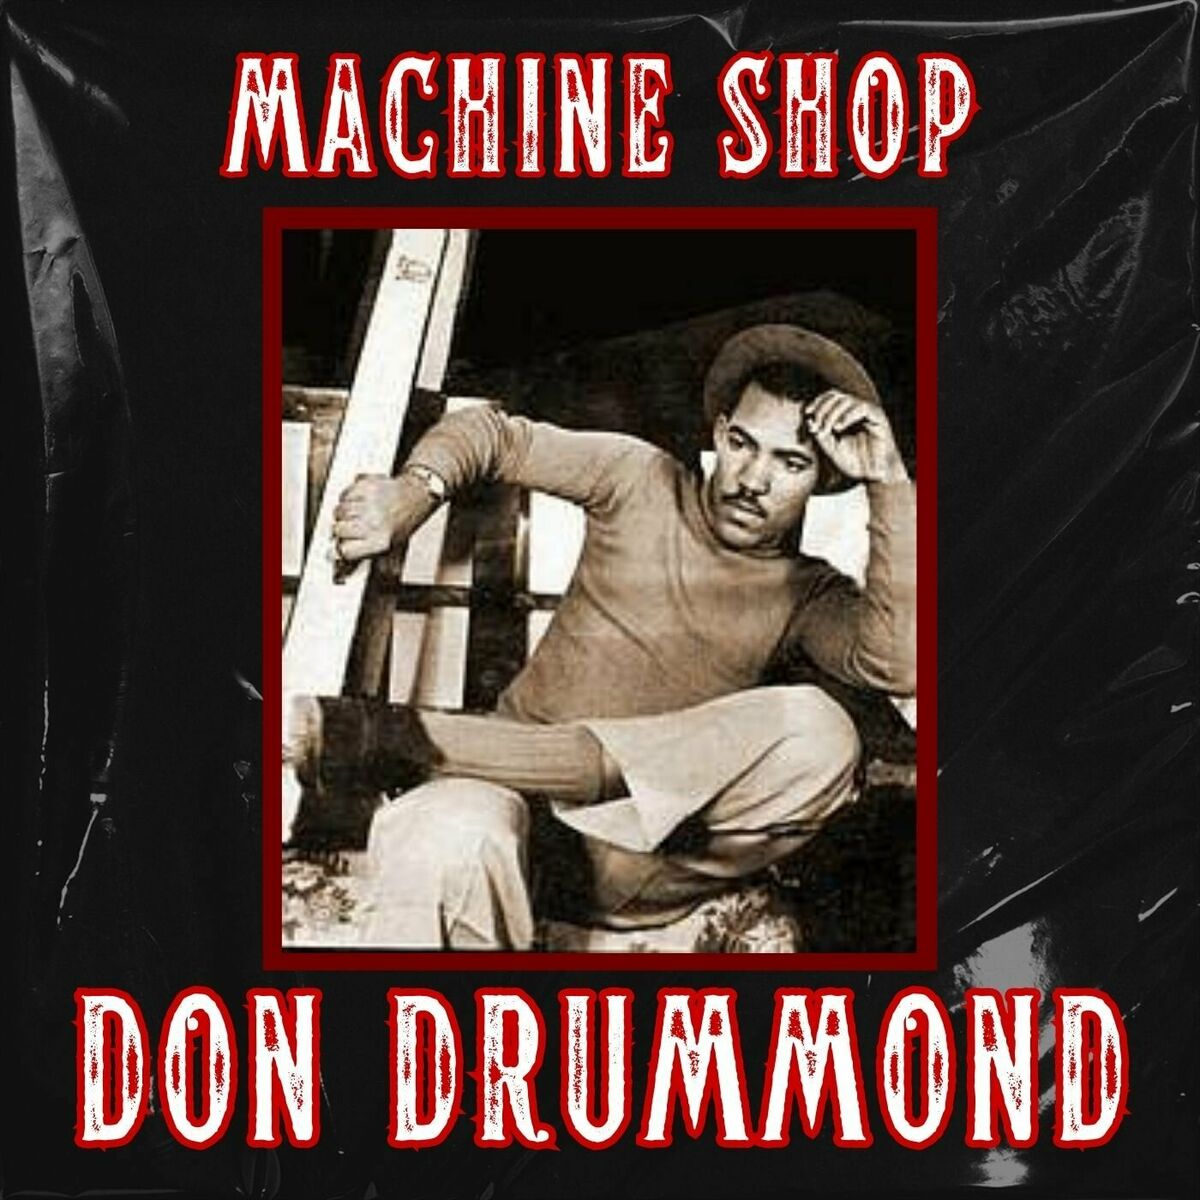 Don Drummond: albums, songs, playlists | Listen on Deezer